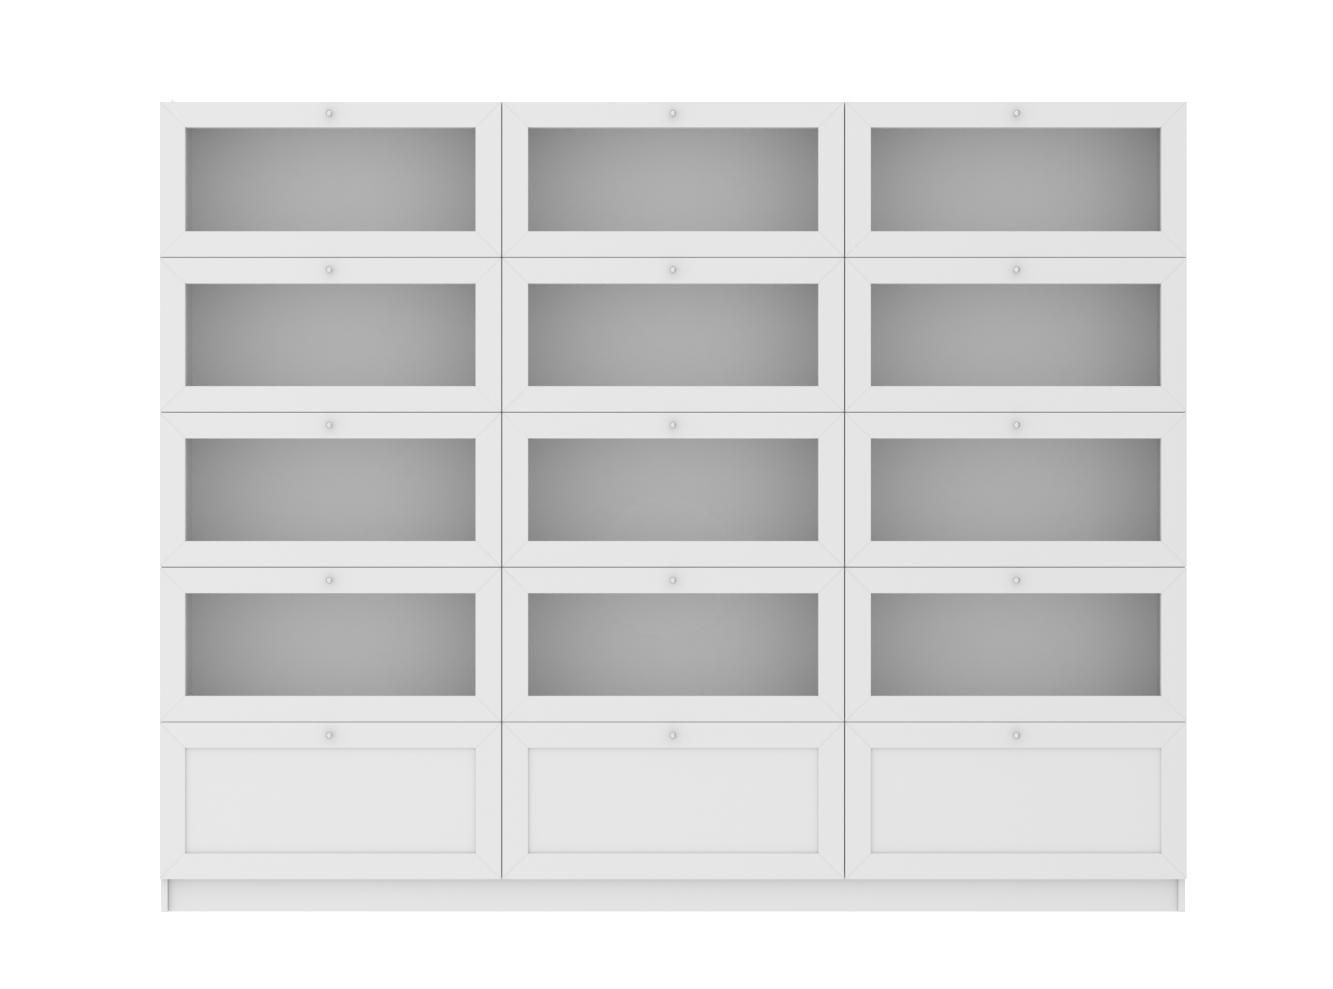  Книжный шкаф Билли 373 white ИКЕА (IKEA) изображение товара